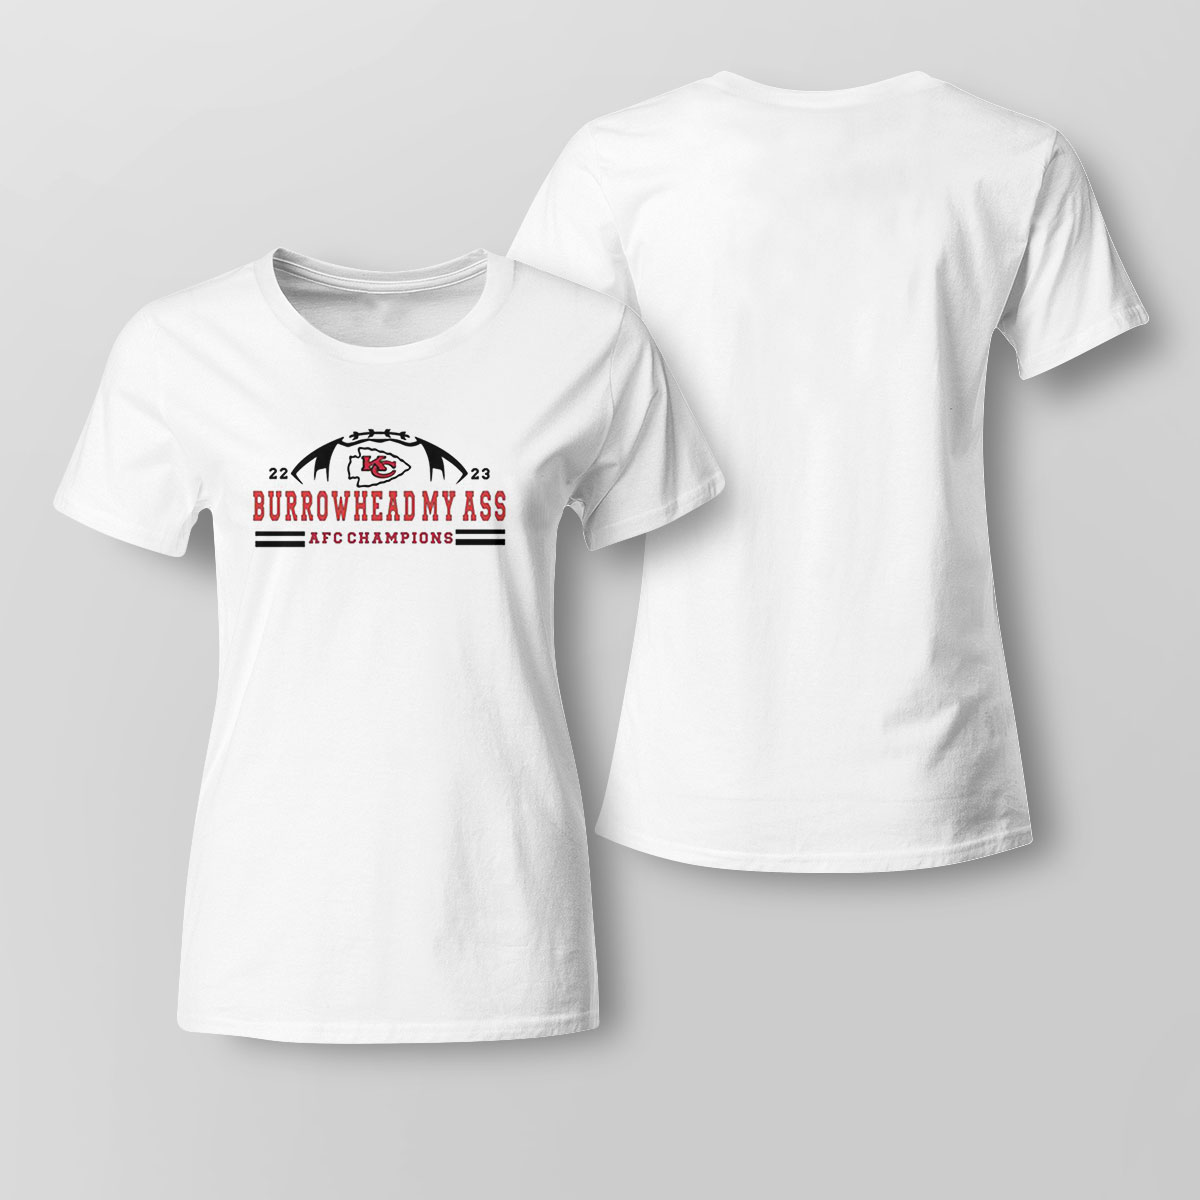 2022 2023 Burrowhead My Ass Afc Champions Shirt Ladies T-shirt